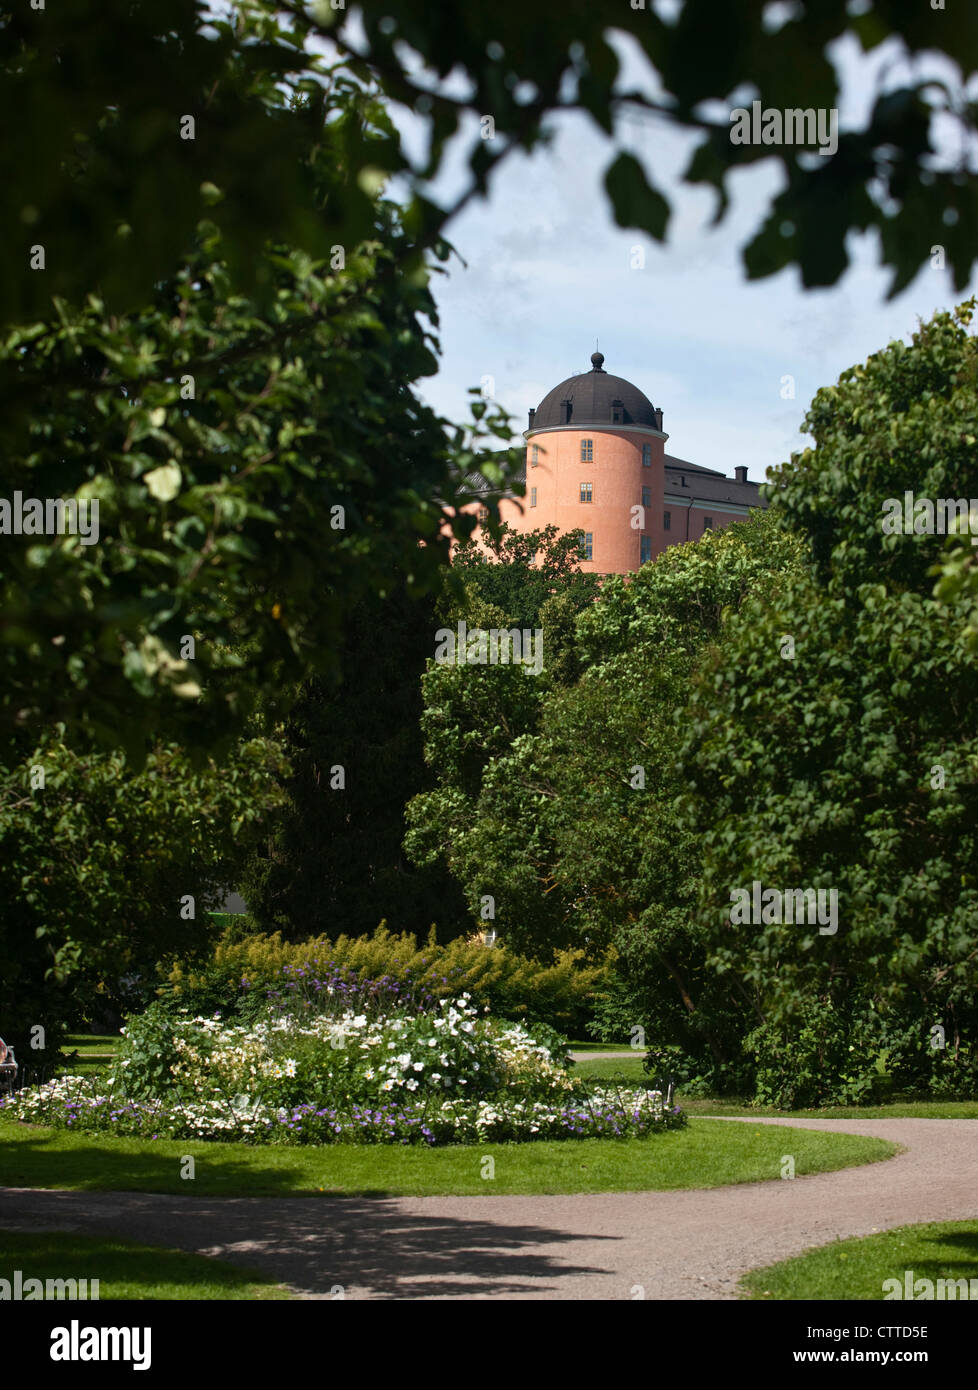 The Stradstradgarden (Stadsträdgården) park below Uppsala castle. Sweden. Stock Photo